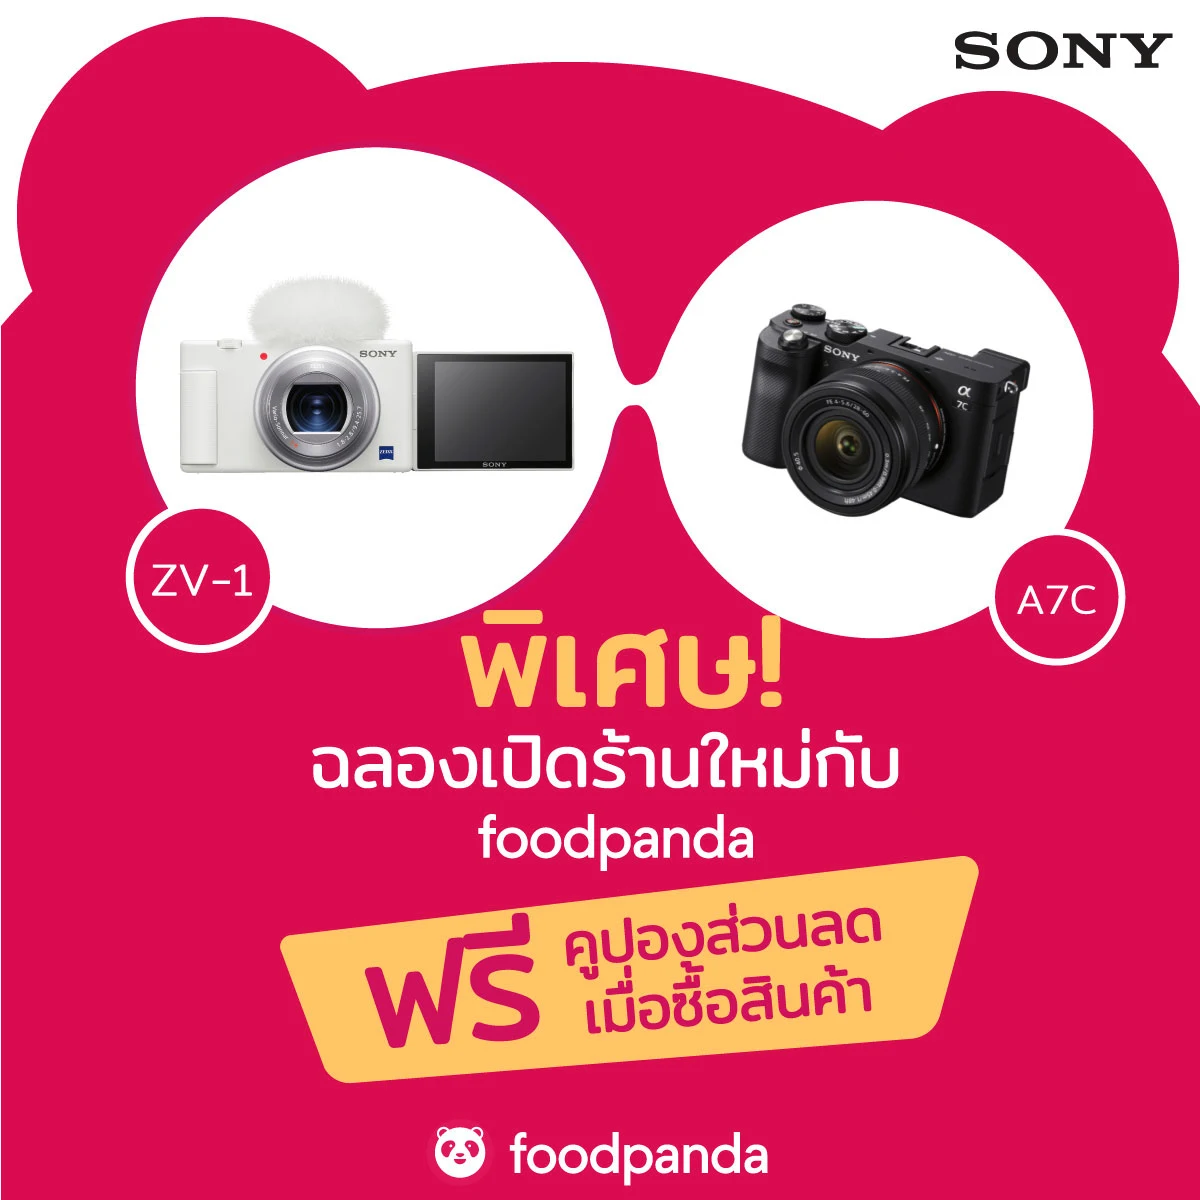 Sony x FoodPanda Campaign Partnership